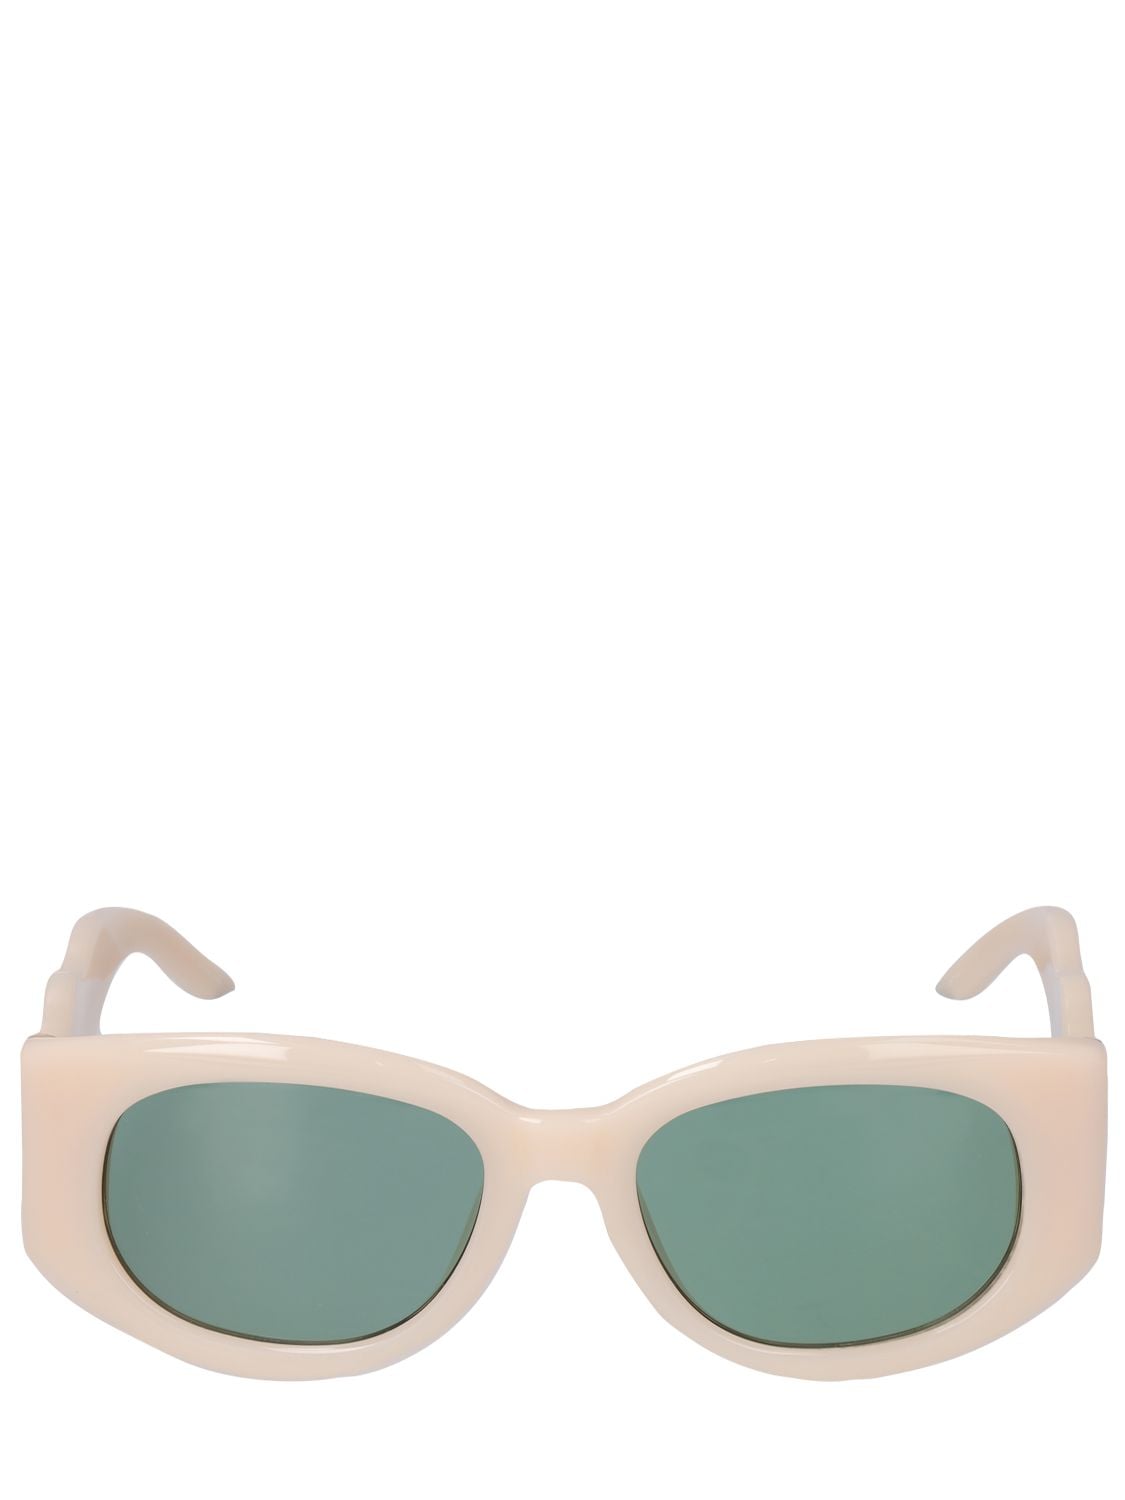 Casablanca Wave Sunglasses Green